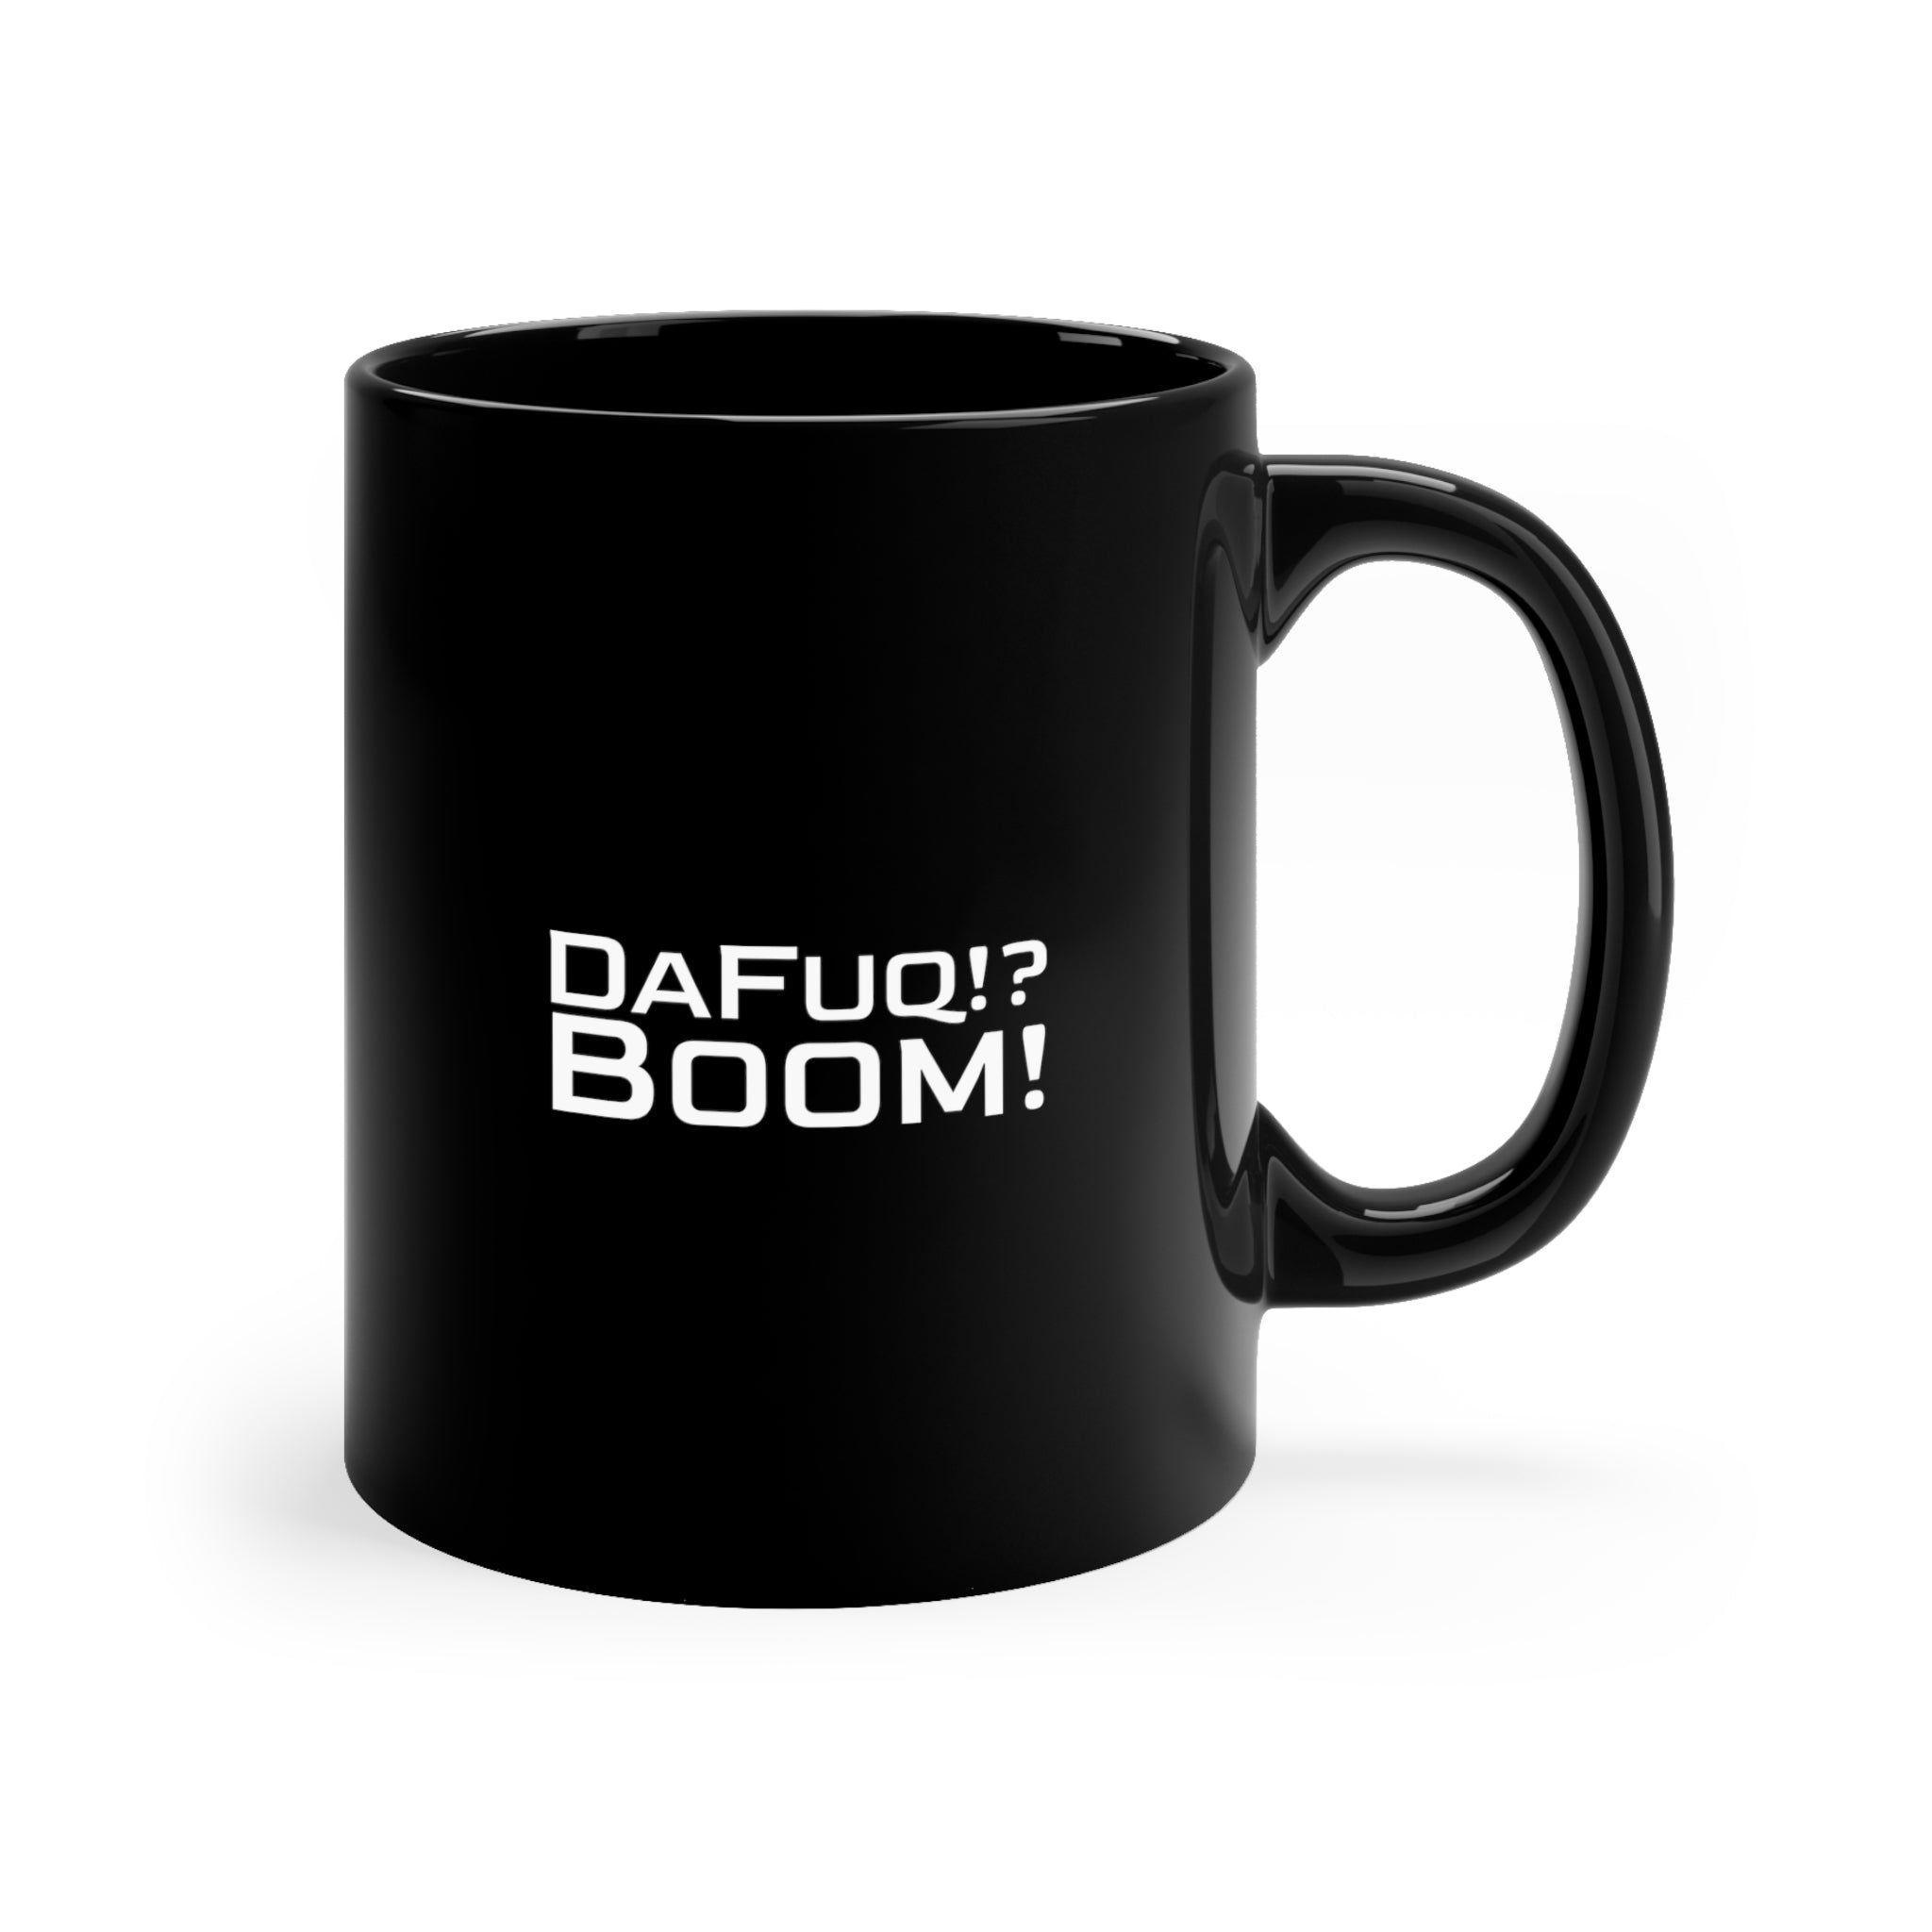 Glossy black mug with DaFuq!?Boom! logo and camera icon